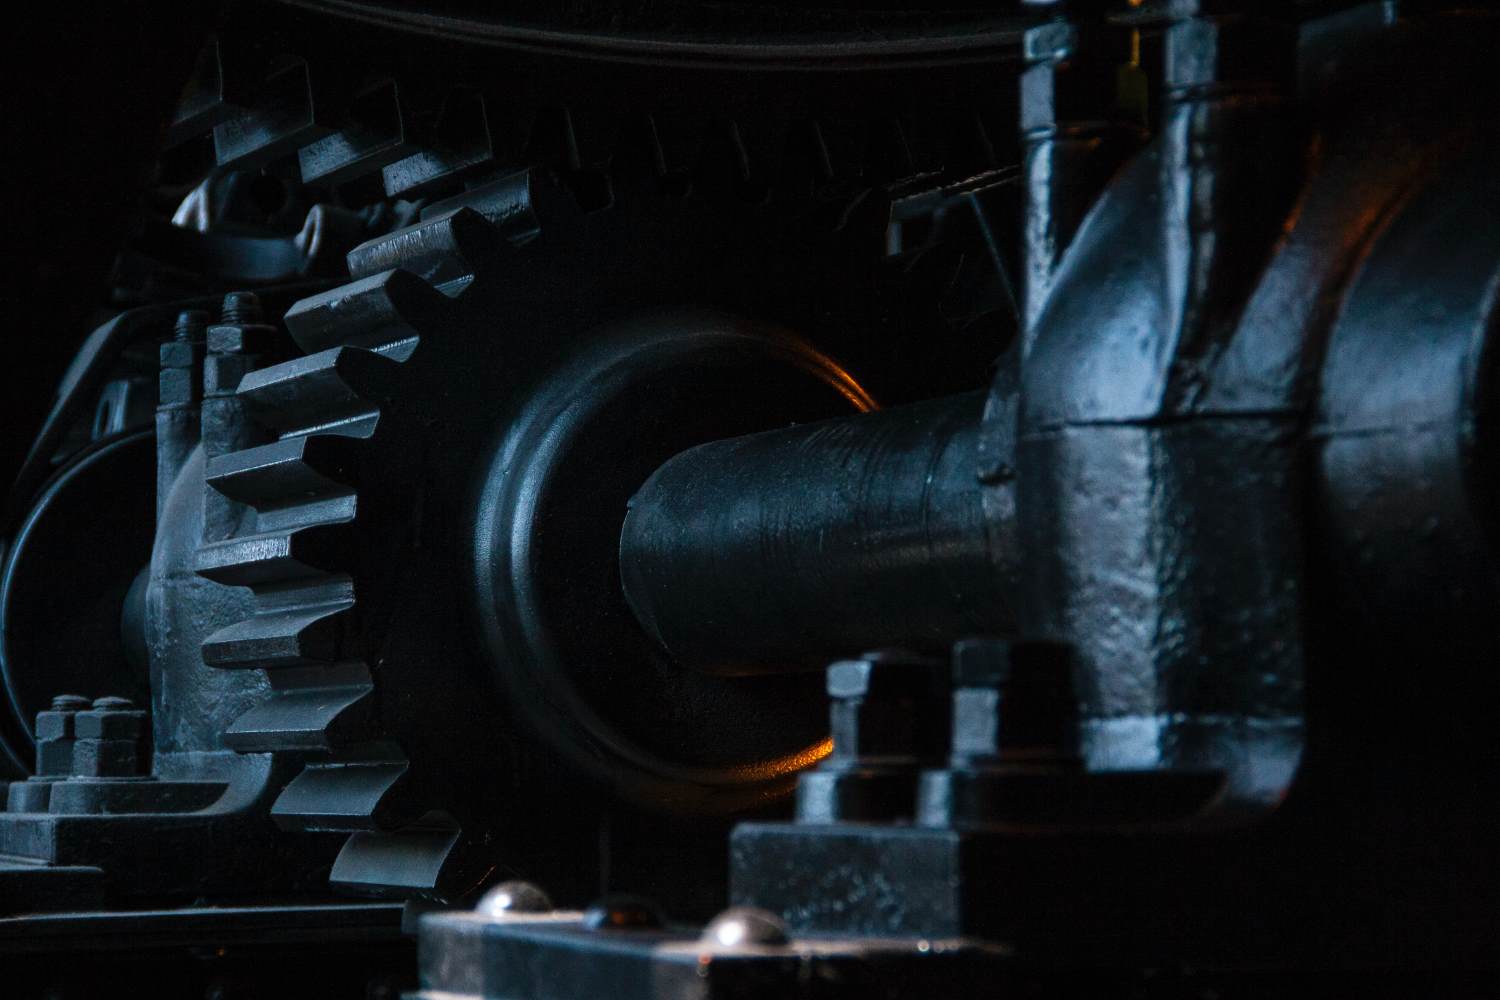 Large gears inside a machine